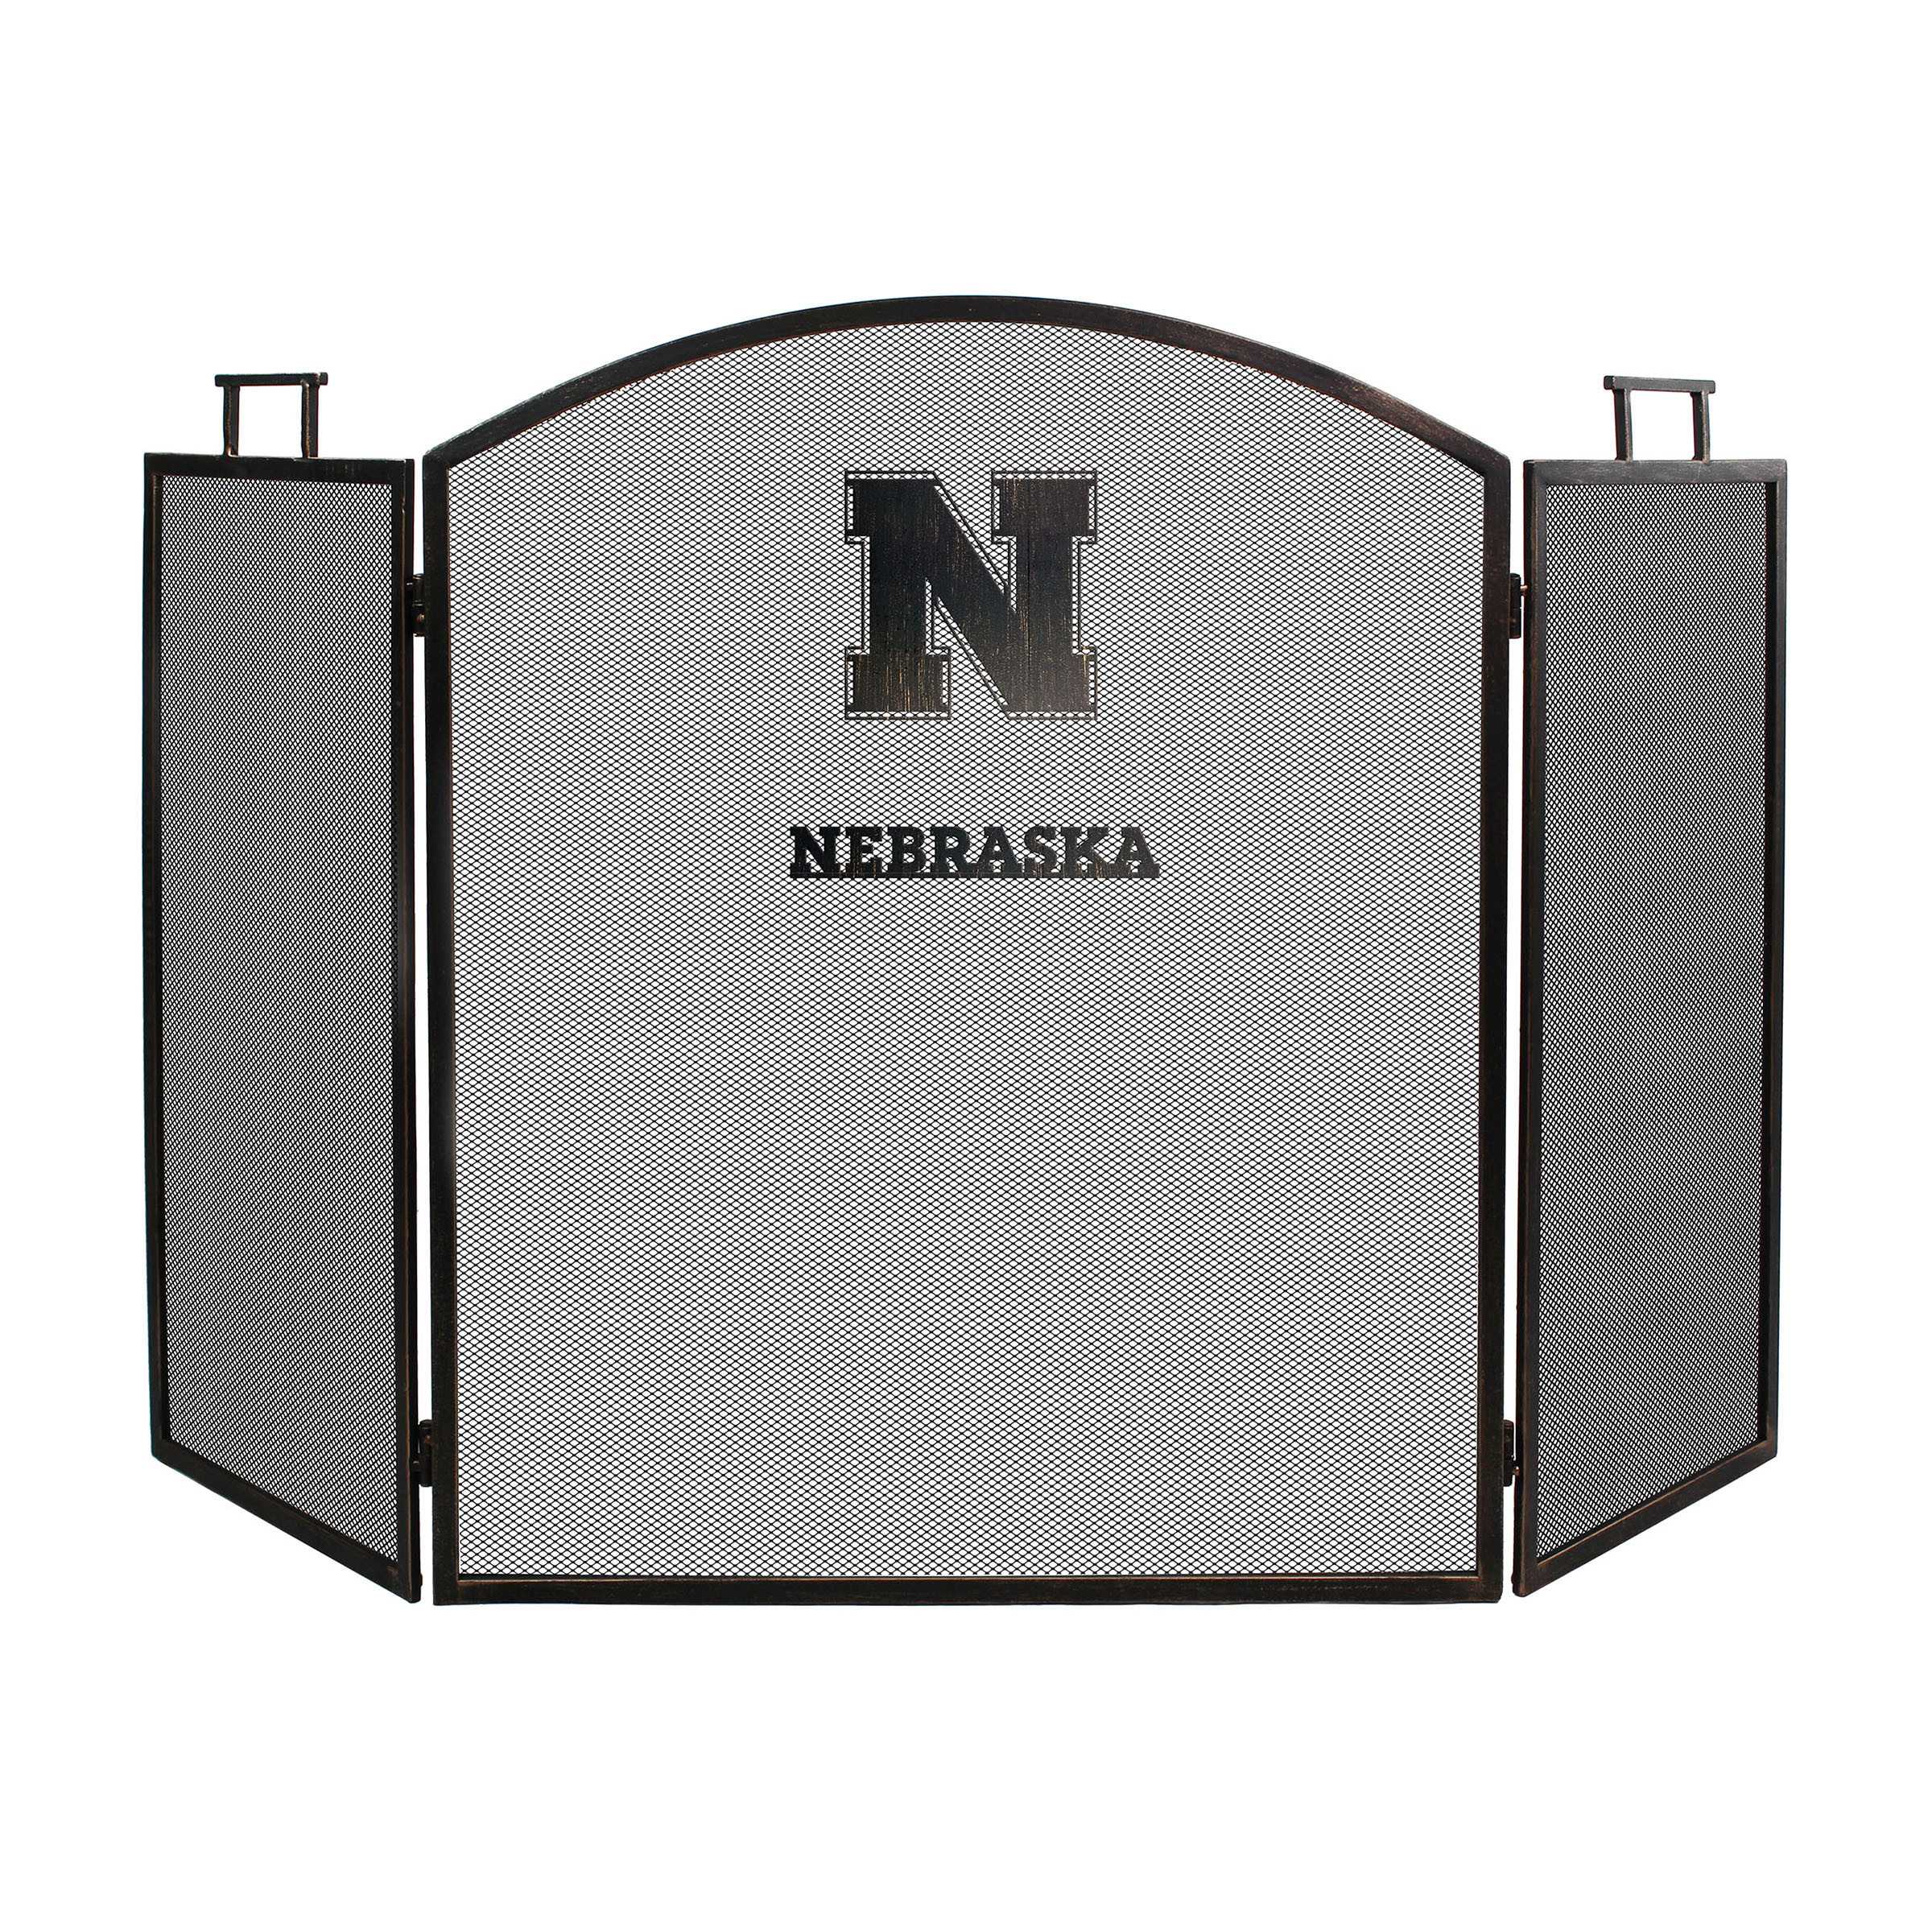 University Of Nebraska Fireplace Screen